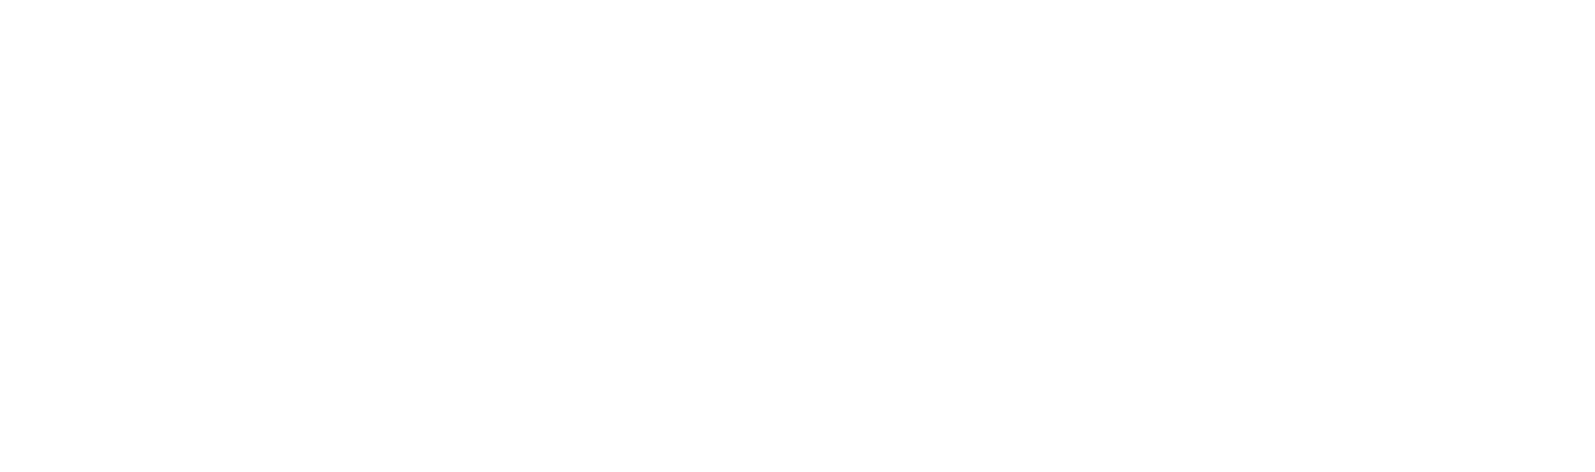 W. R. Berkley logo large for dark backgrounds (transparent PNG)